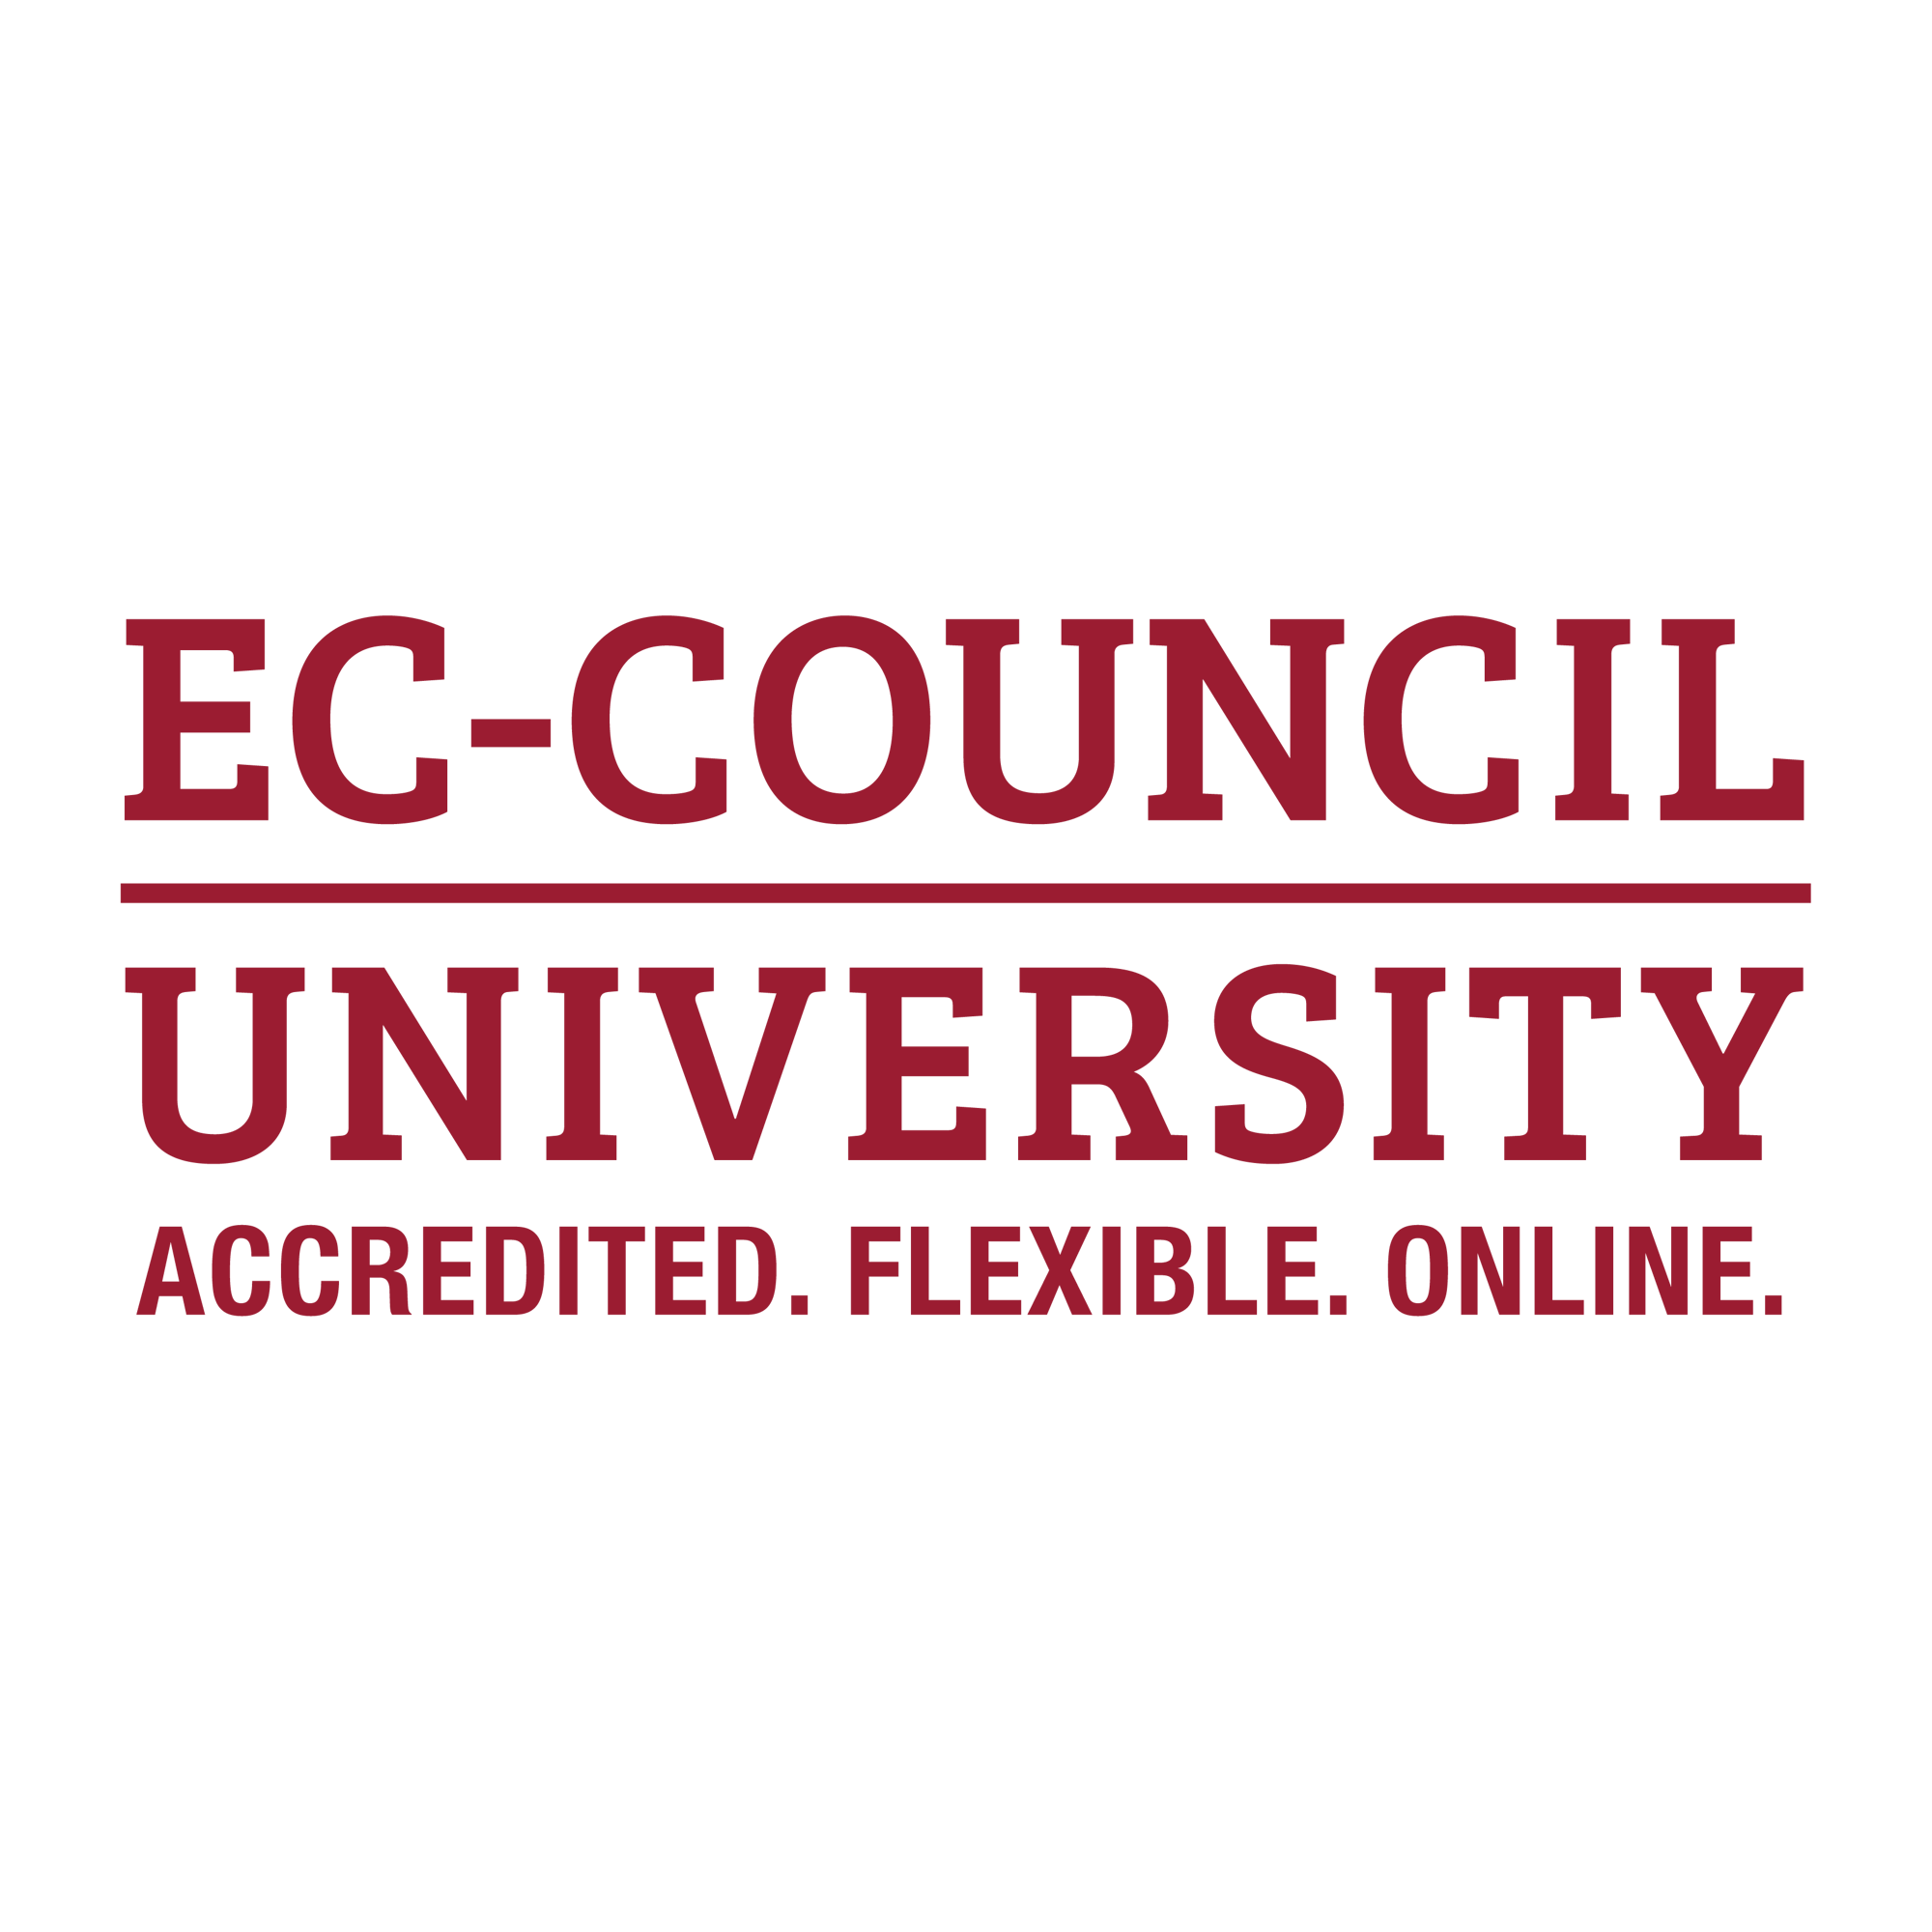 EC-Council University Logo